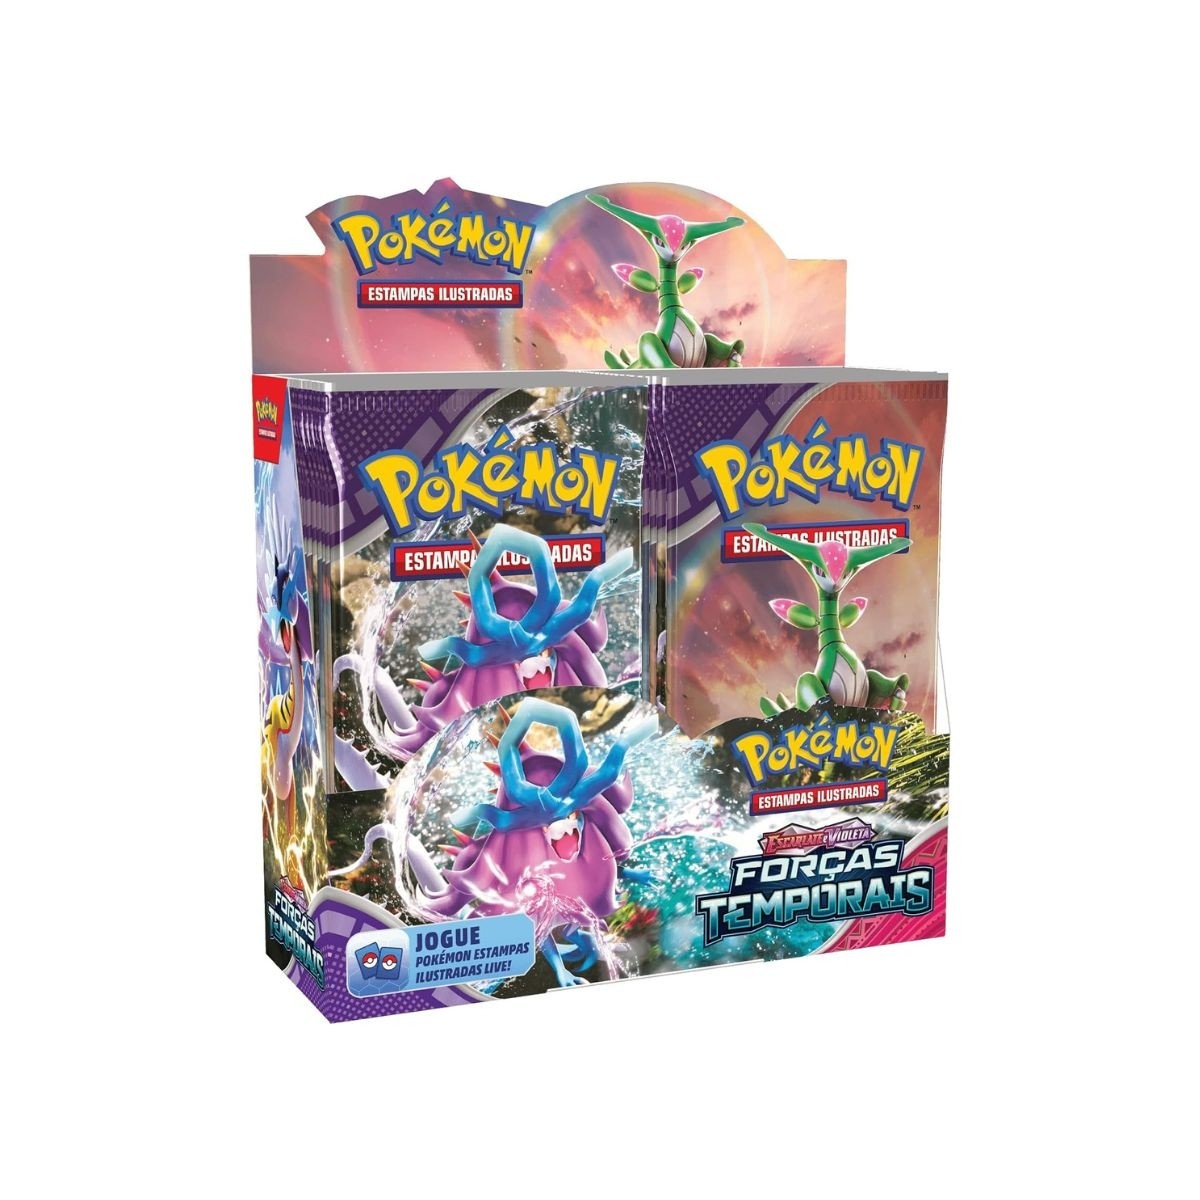 Pokémon Box Display Escarlate E Violeta 5 Forças Temporais - Copag